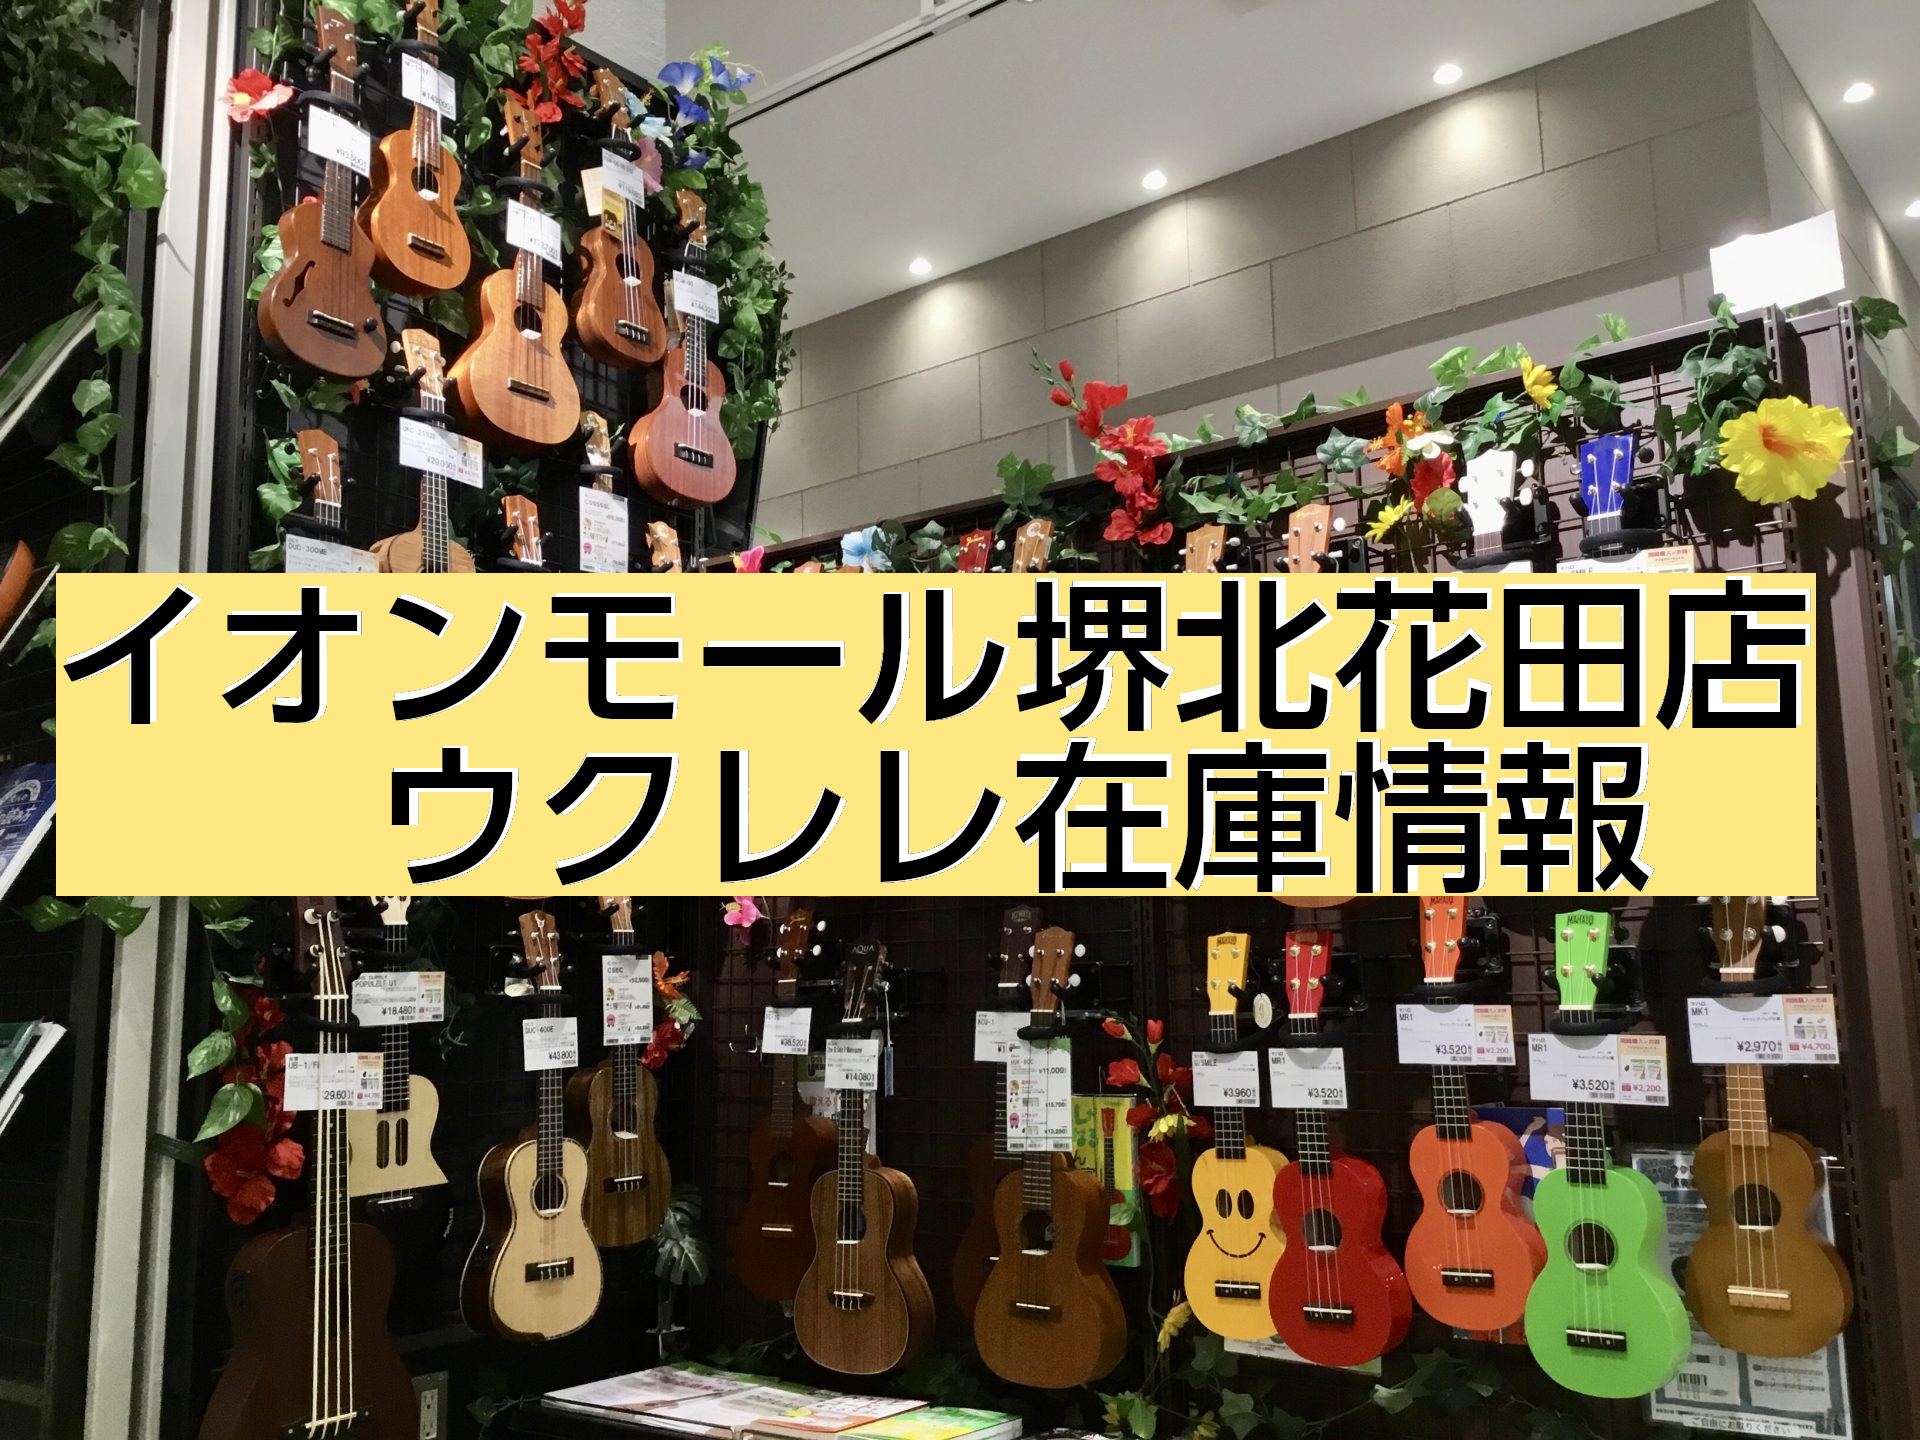 [https://www.shimamura.co.jp/shop/sakaikitahanada/information/20200530/2497:title=] [!!みなさま、こんにちは！!!] 楽器経験のないお客様も始めやすい楽器、[!!ウクレレ!!]をご紹介致します。]][!!ウクレレに […]